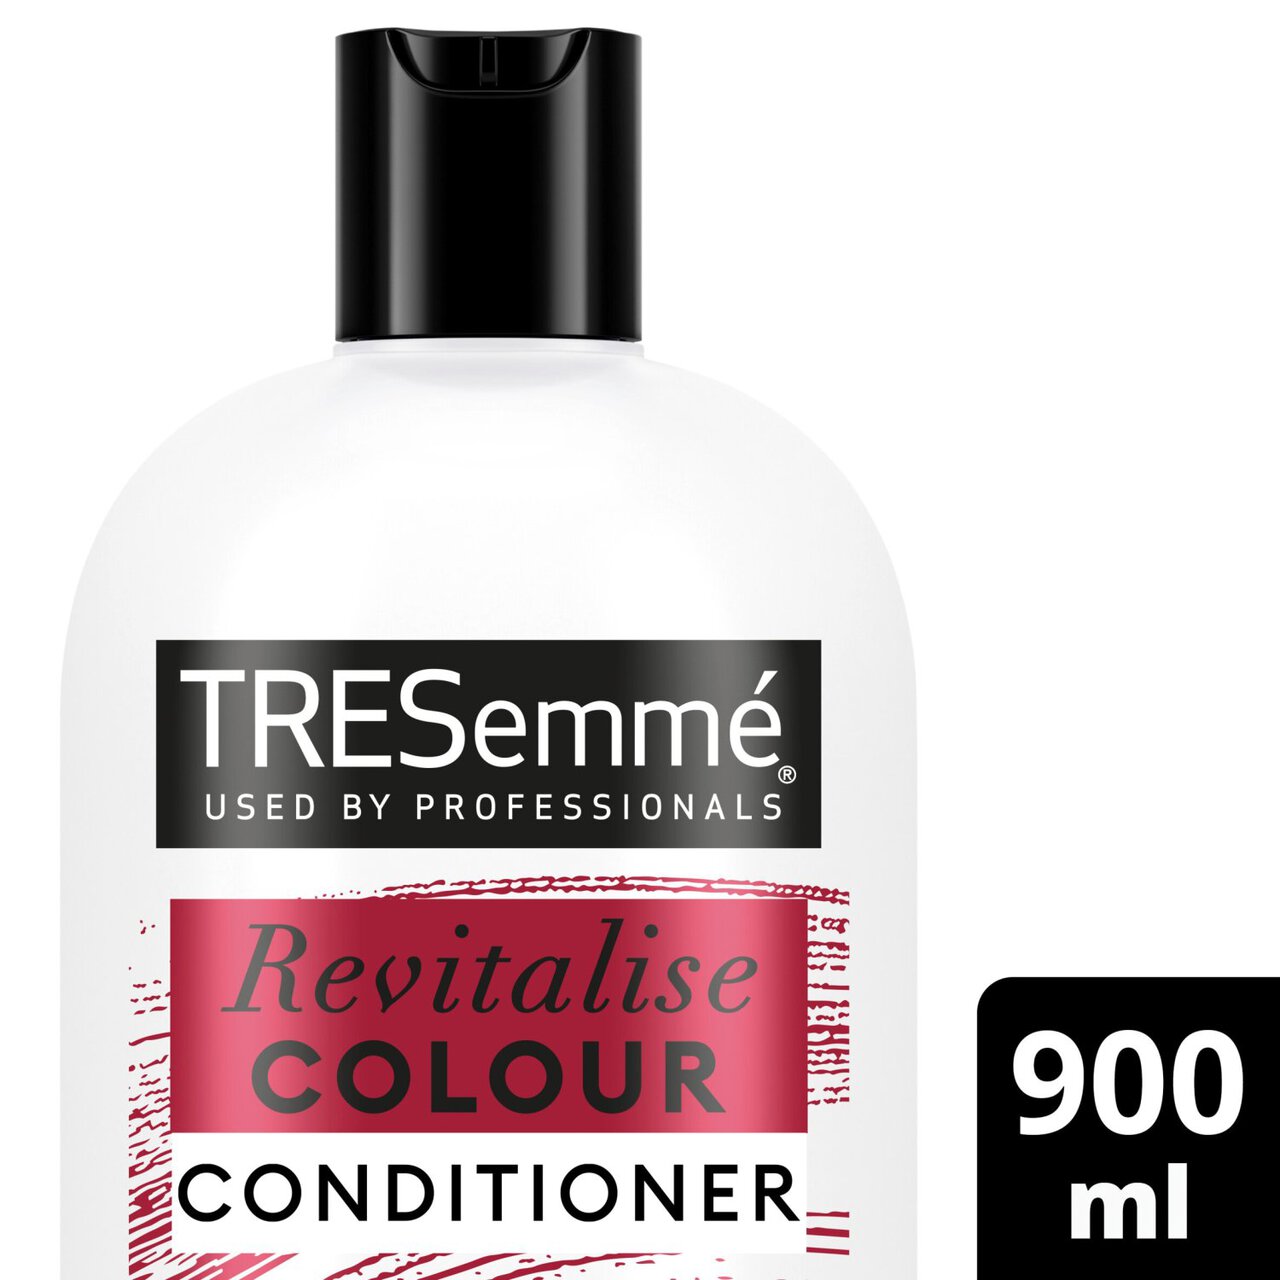 Tresemme Revitalise Colour Conditioner 900ml